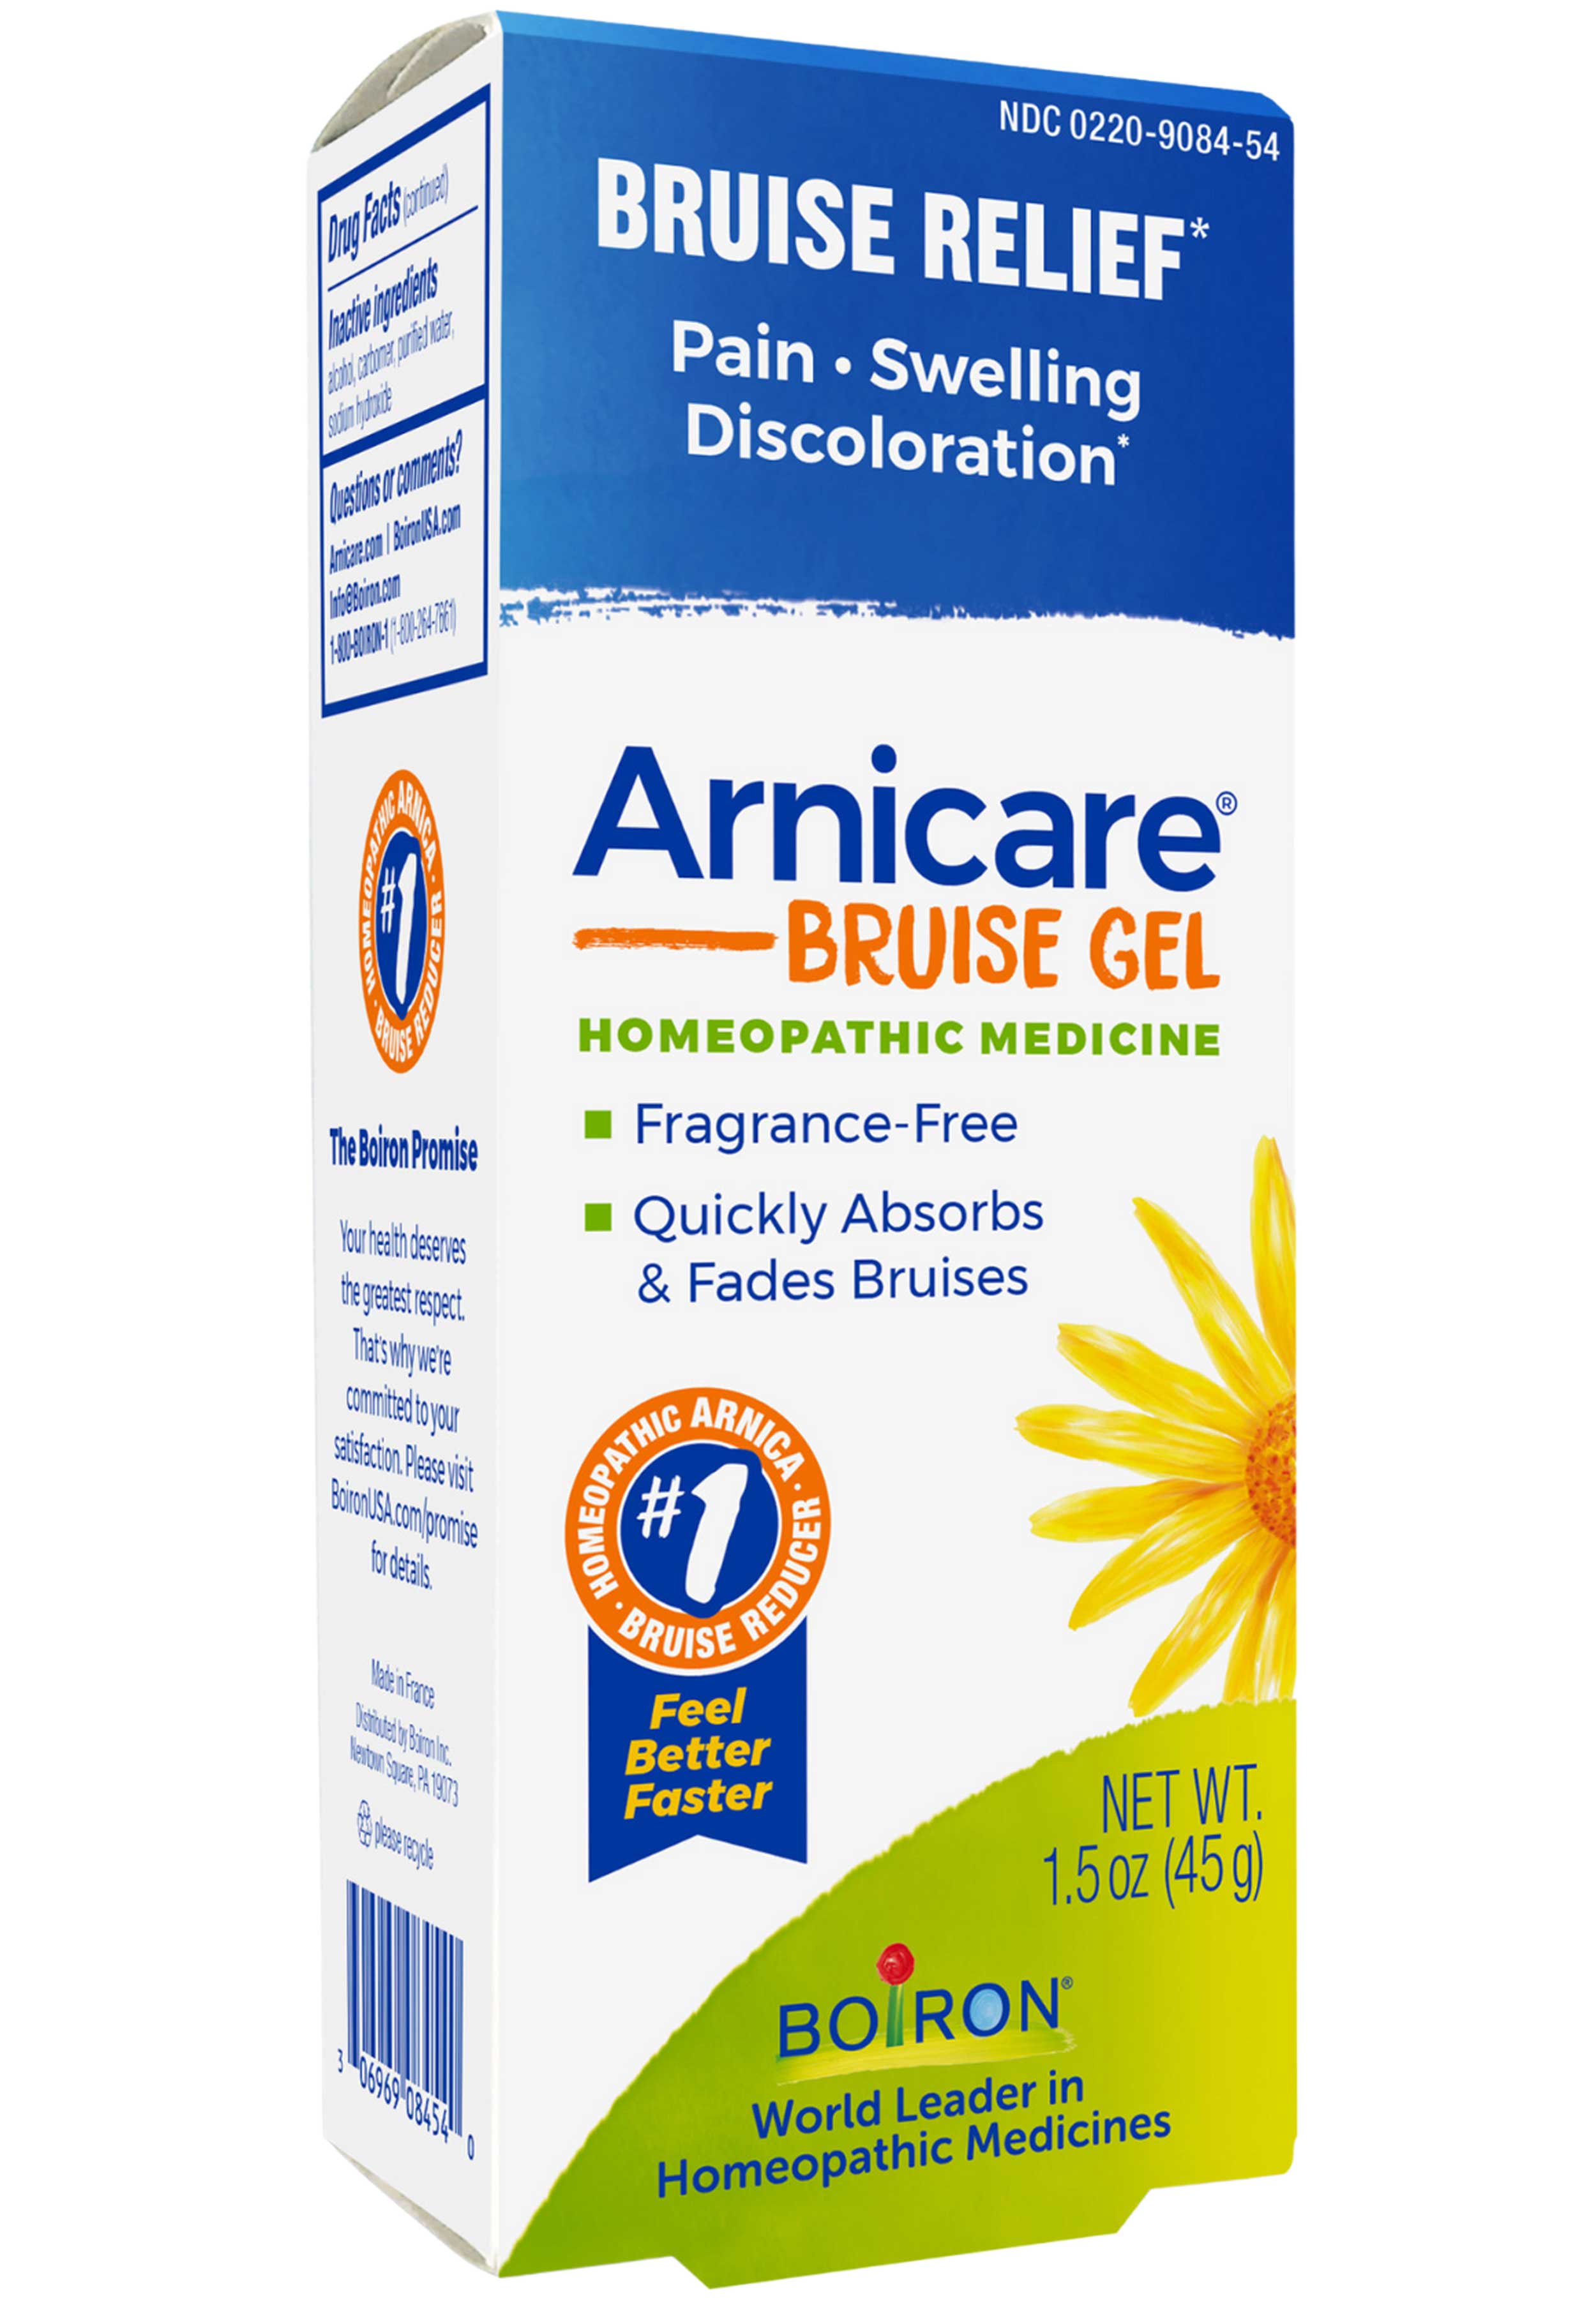 Boiron Homeopathics Arnicare Bruise Gel